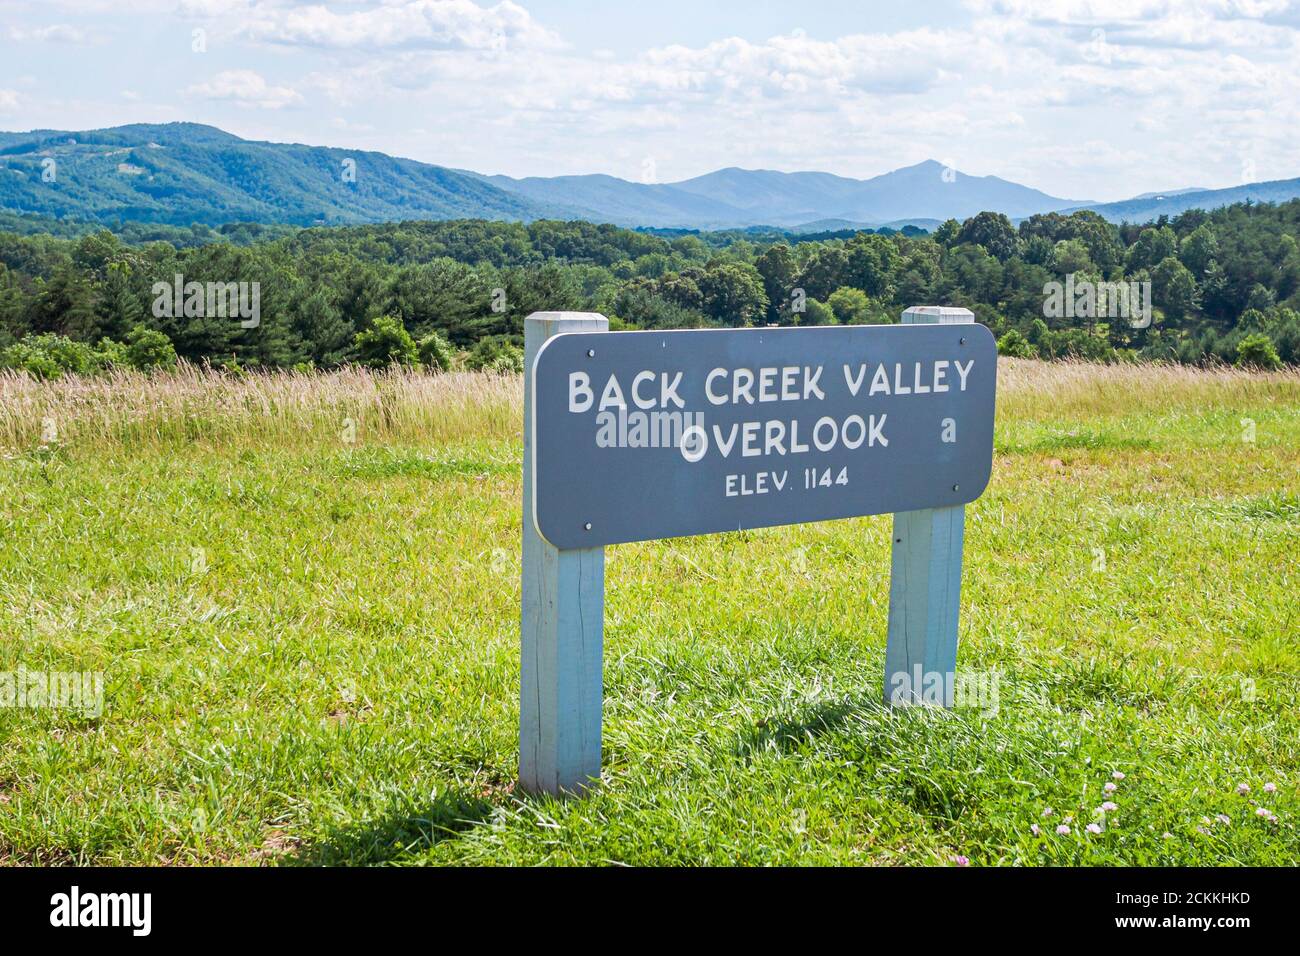 Virginia Appalachian Mountains Southern Appalachia, Roanoke Blue Ridge Mountains Parkway, Natur Natur, Landschaft Back Creek Valley Overlook, Stockfoto